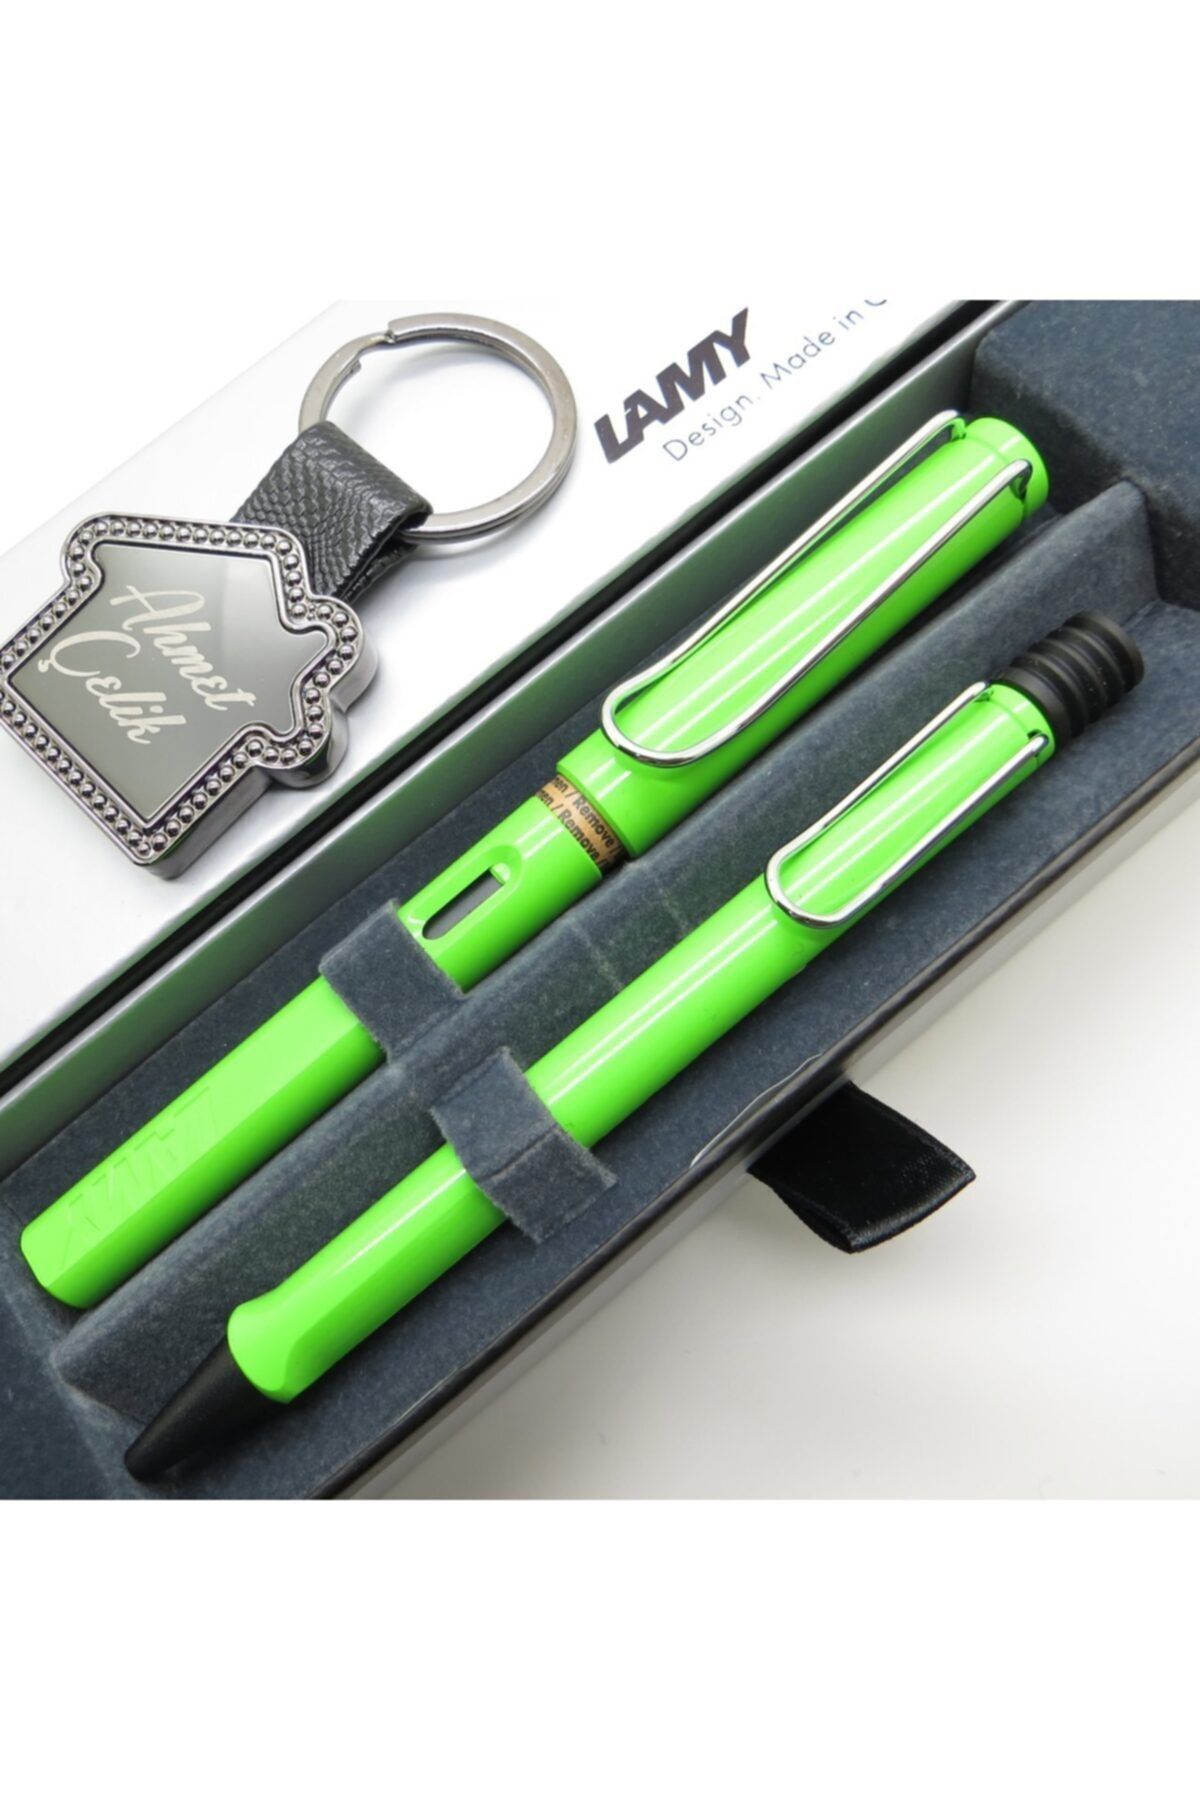 Lamy Safari Elma Yeşili Dolma Kalem + Tükenmez Kalem Seti | Isme Özel + Anahtarlık + Uç Seçeneği